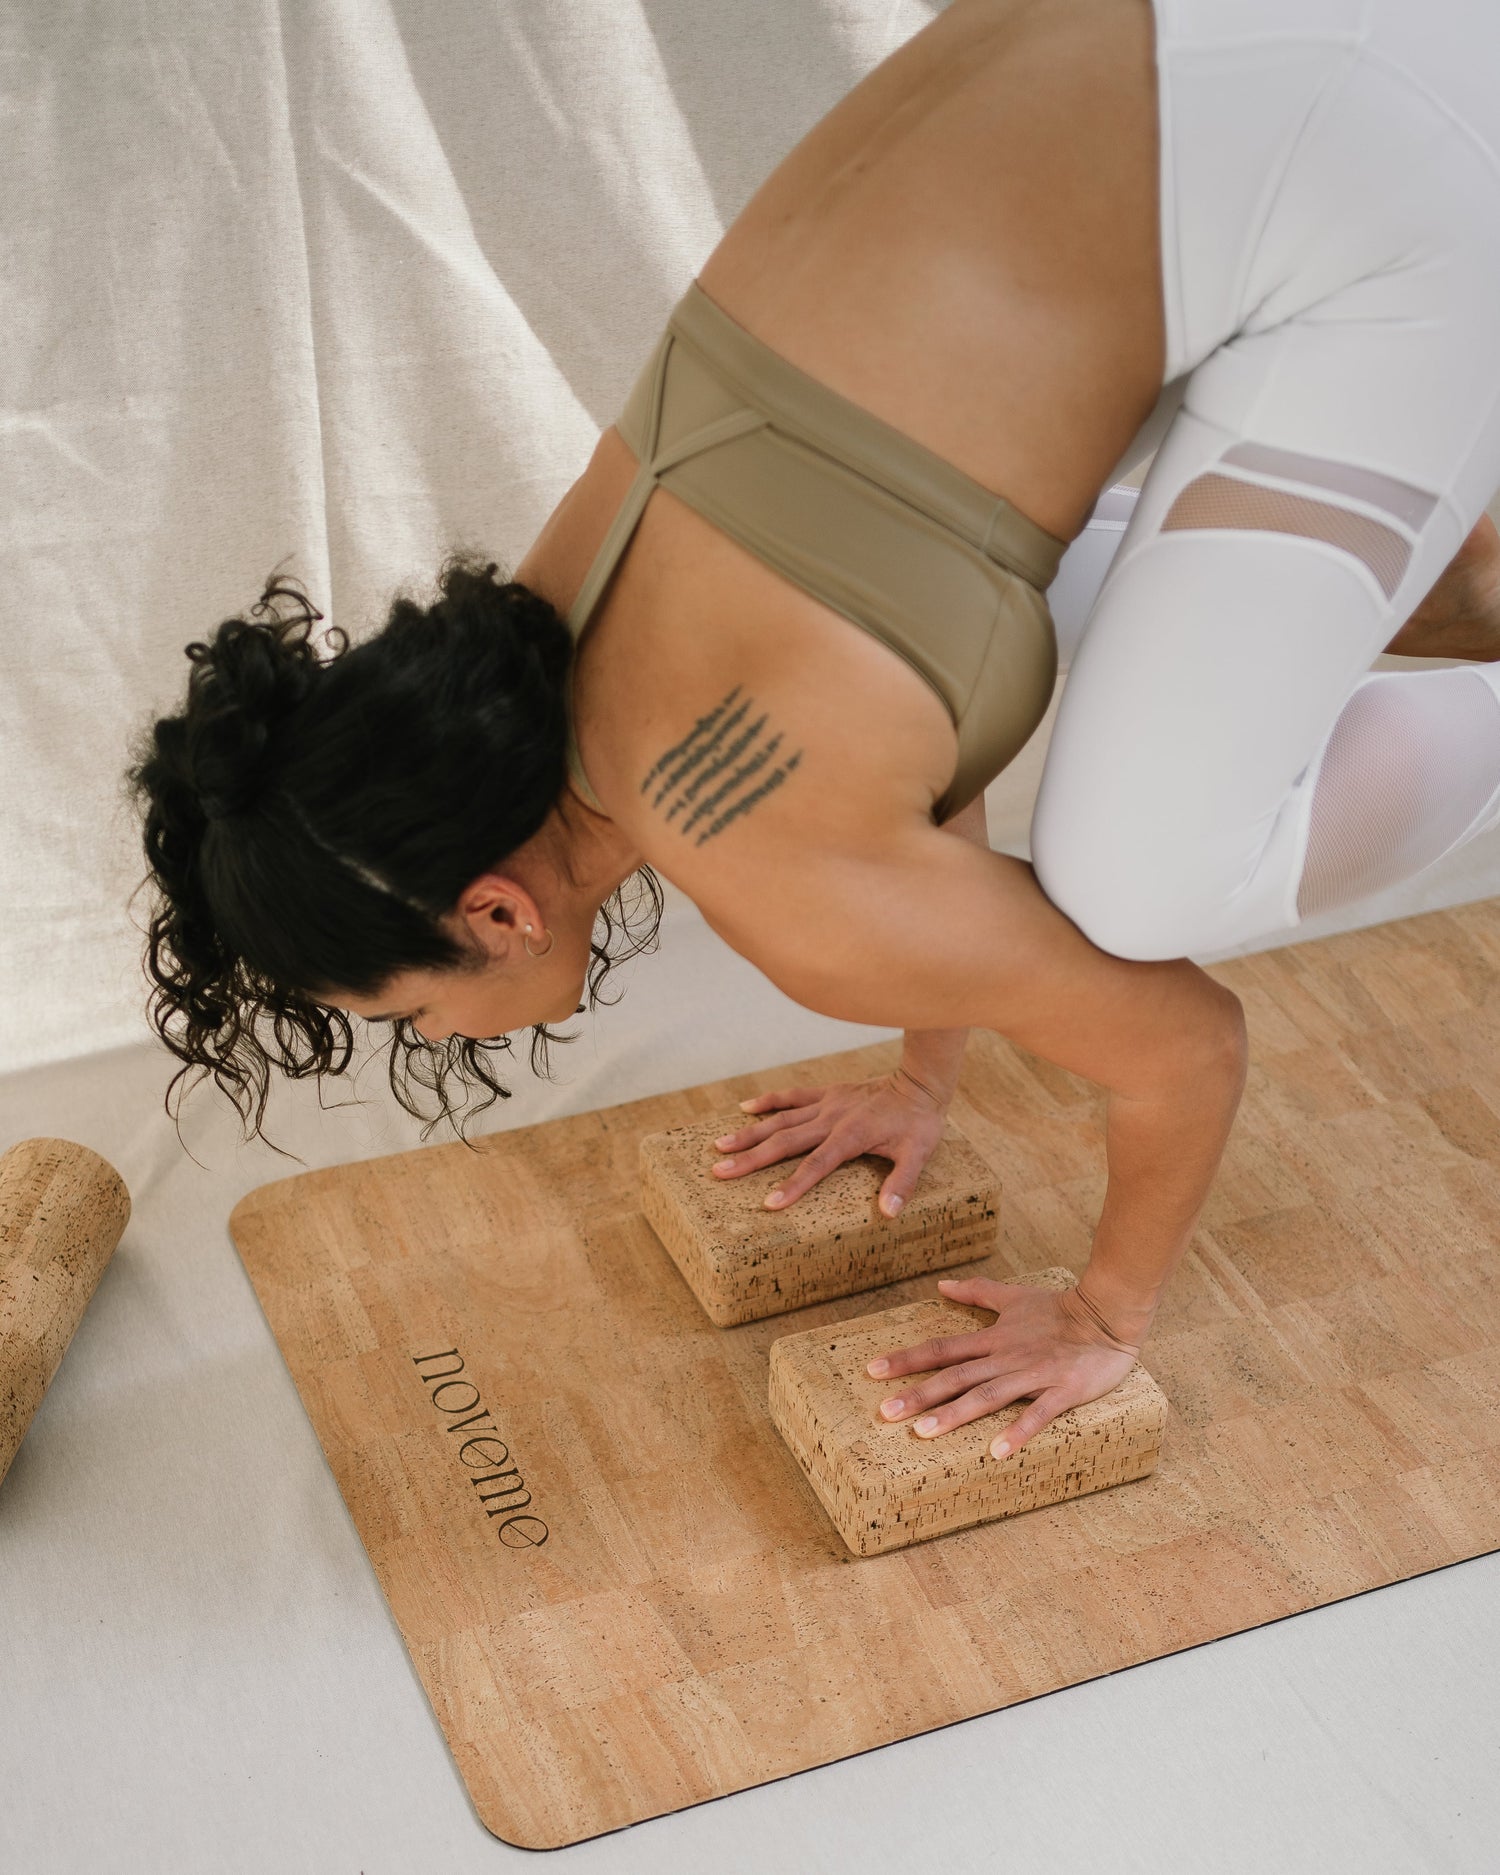 Yogi practicing using two Noveme cork yoga blocks on a Noveme cork yoga mat